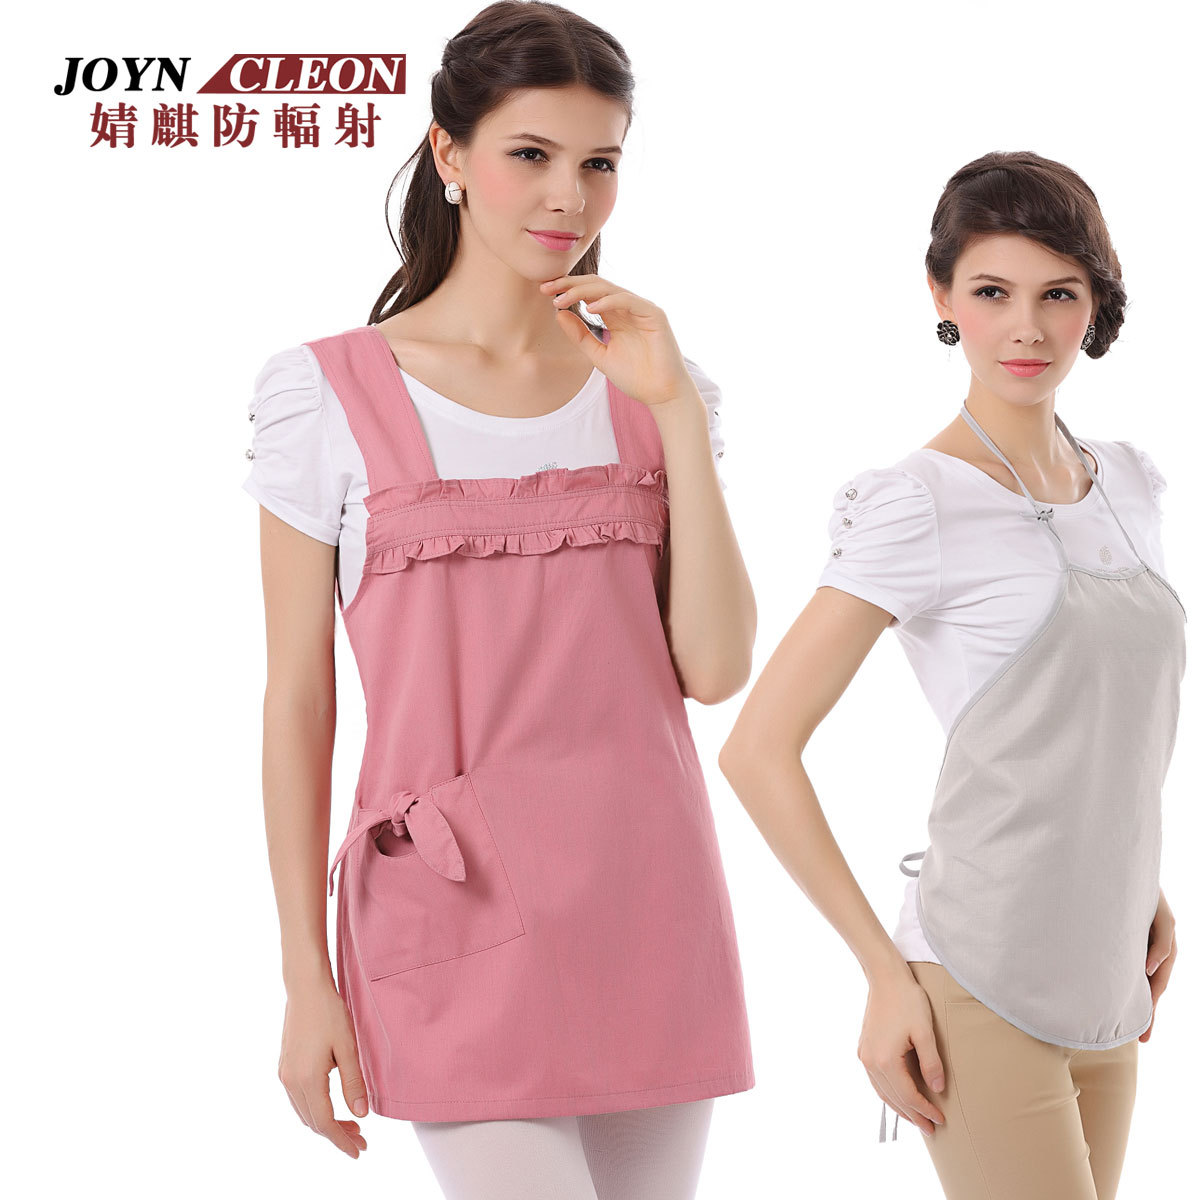 Joyncleon qi radiation-resistant maternity clothing silver fiber radiation-resistant maternity clothing radiation-resistant